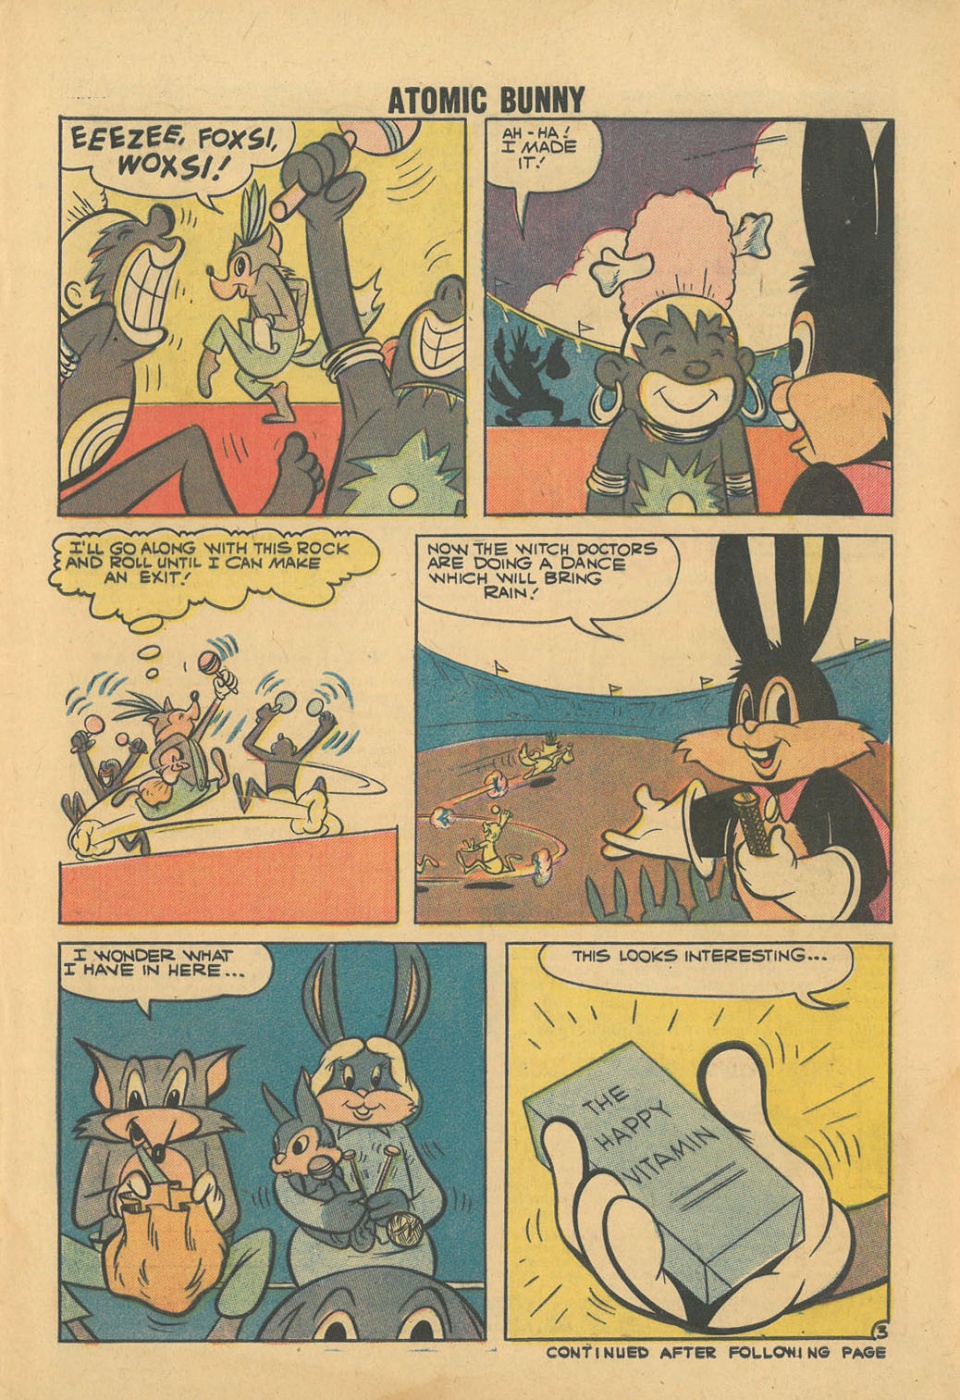 Atomic-Bunny-Comic-Strips (c) (5)